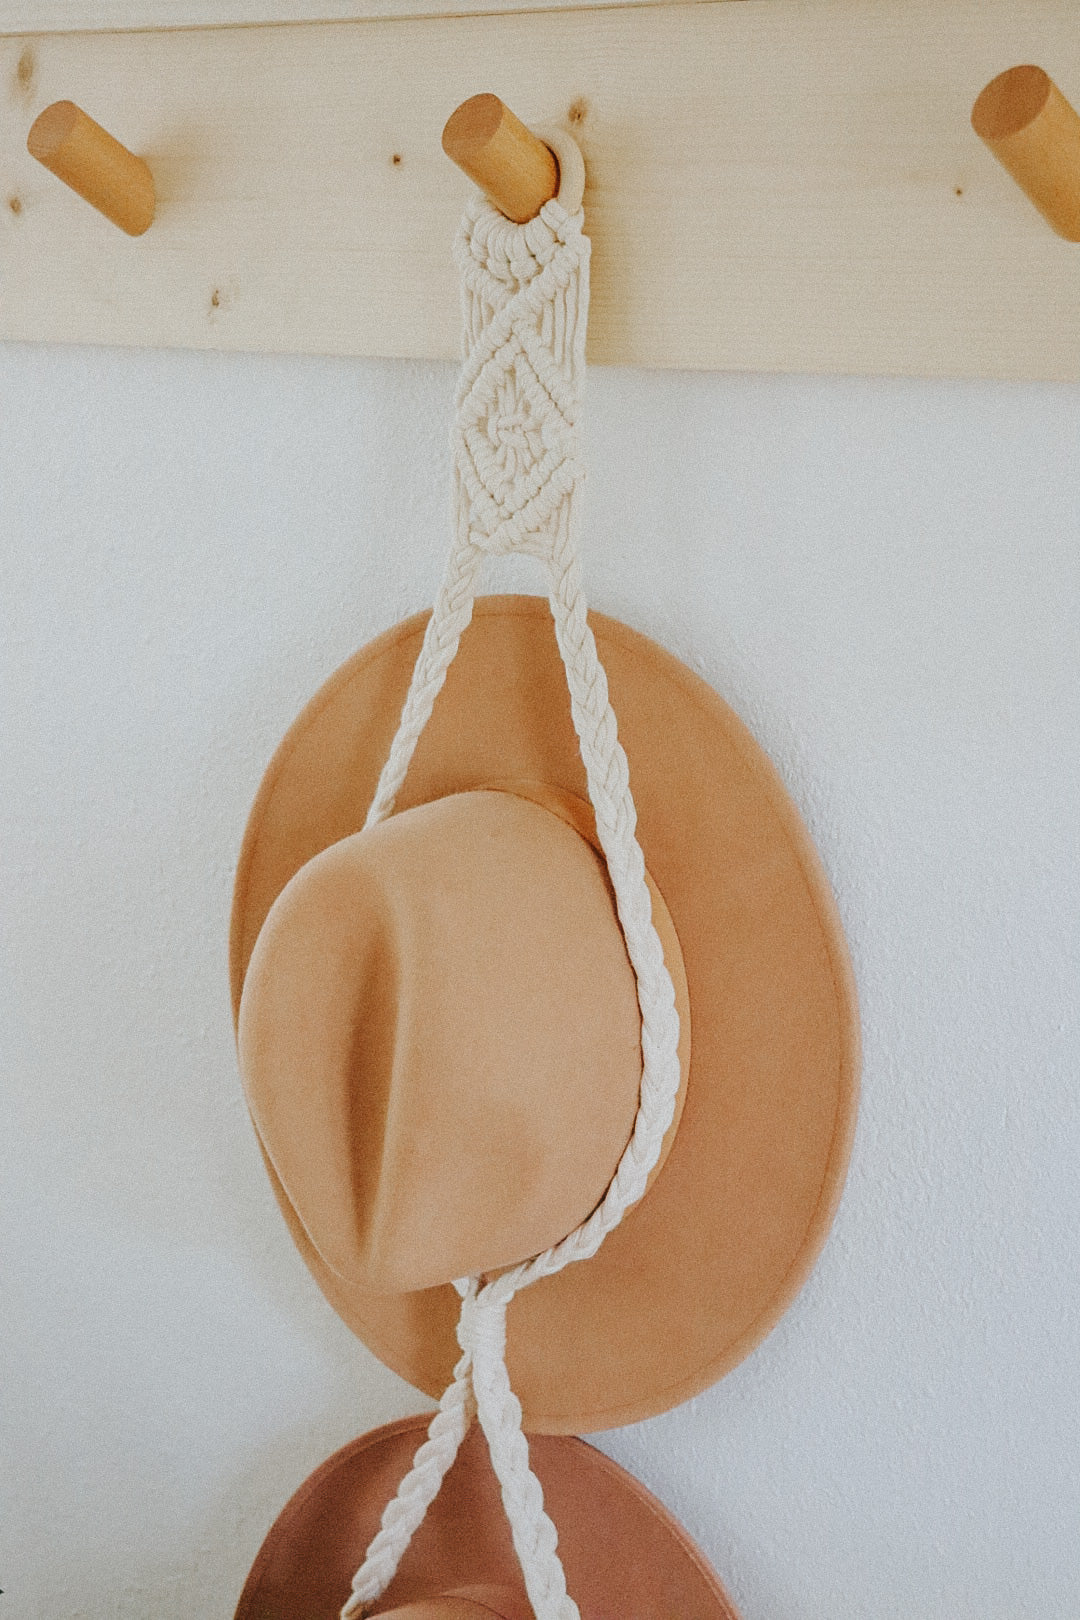 Boho Macrame Hat Hanger